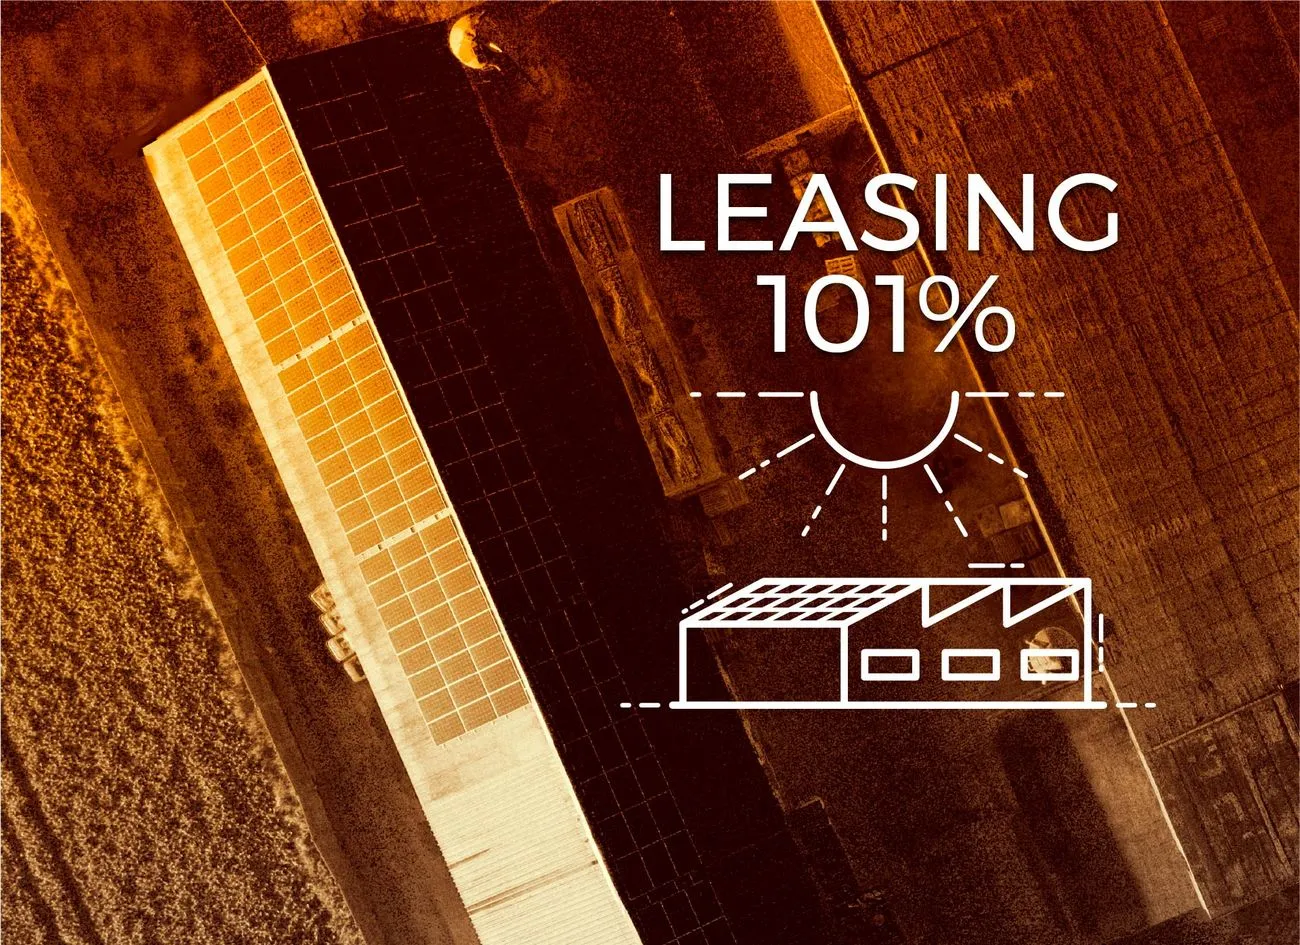 Fotowoltaika w leasing 1% od OZE Biomar i Idea Getin Leasing S.A